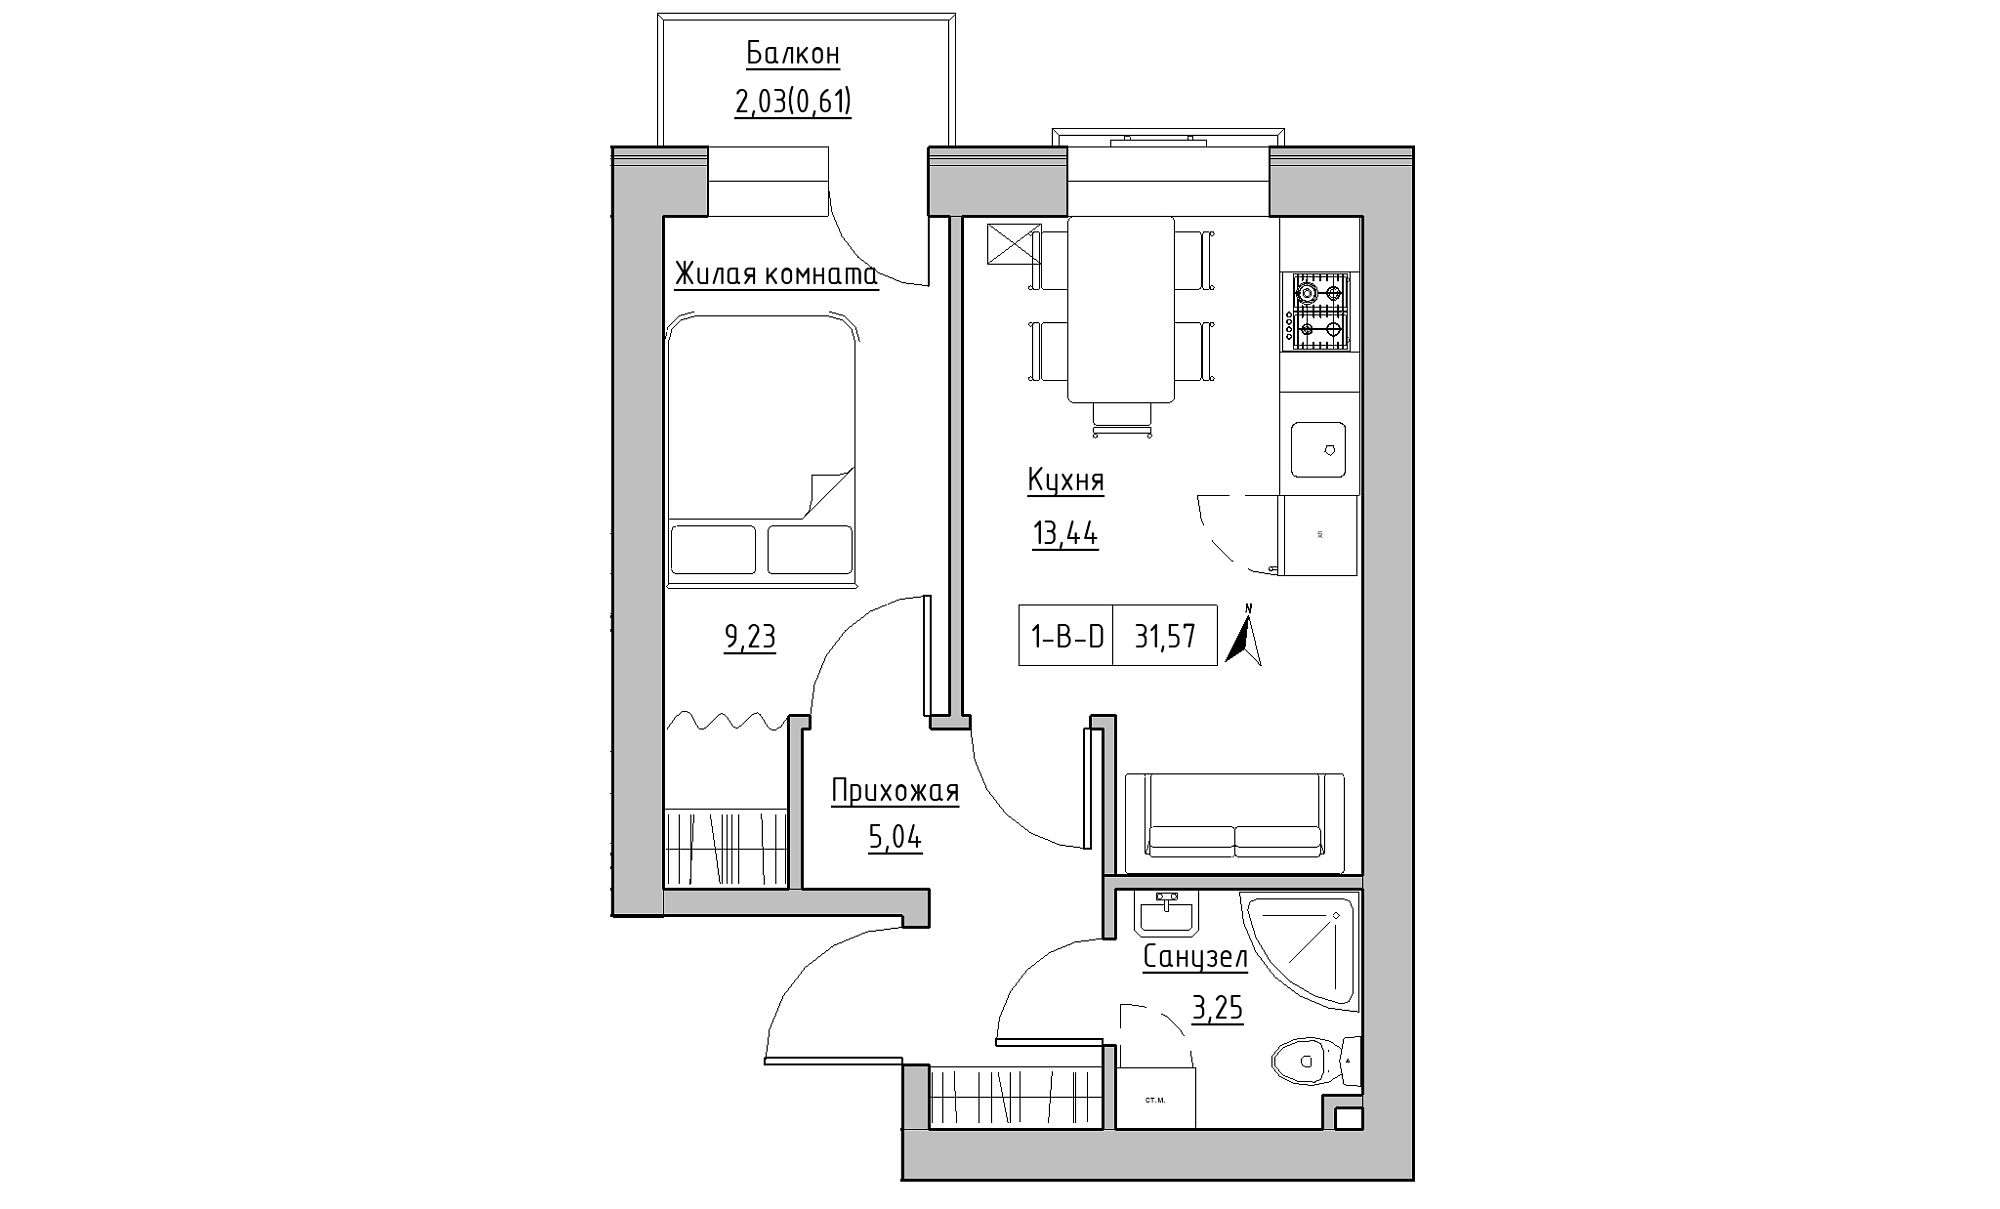 Planning 1-rm flats area 31.57m2, KS-016-03/0003.